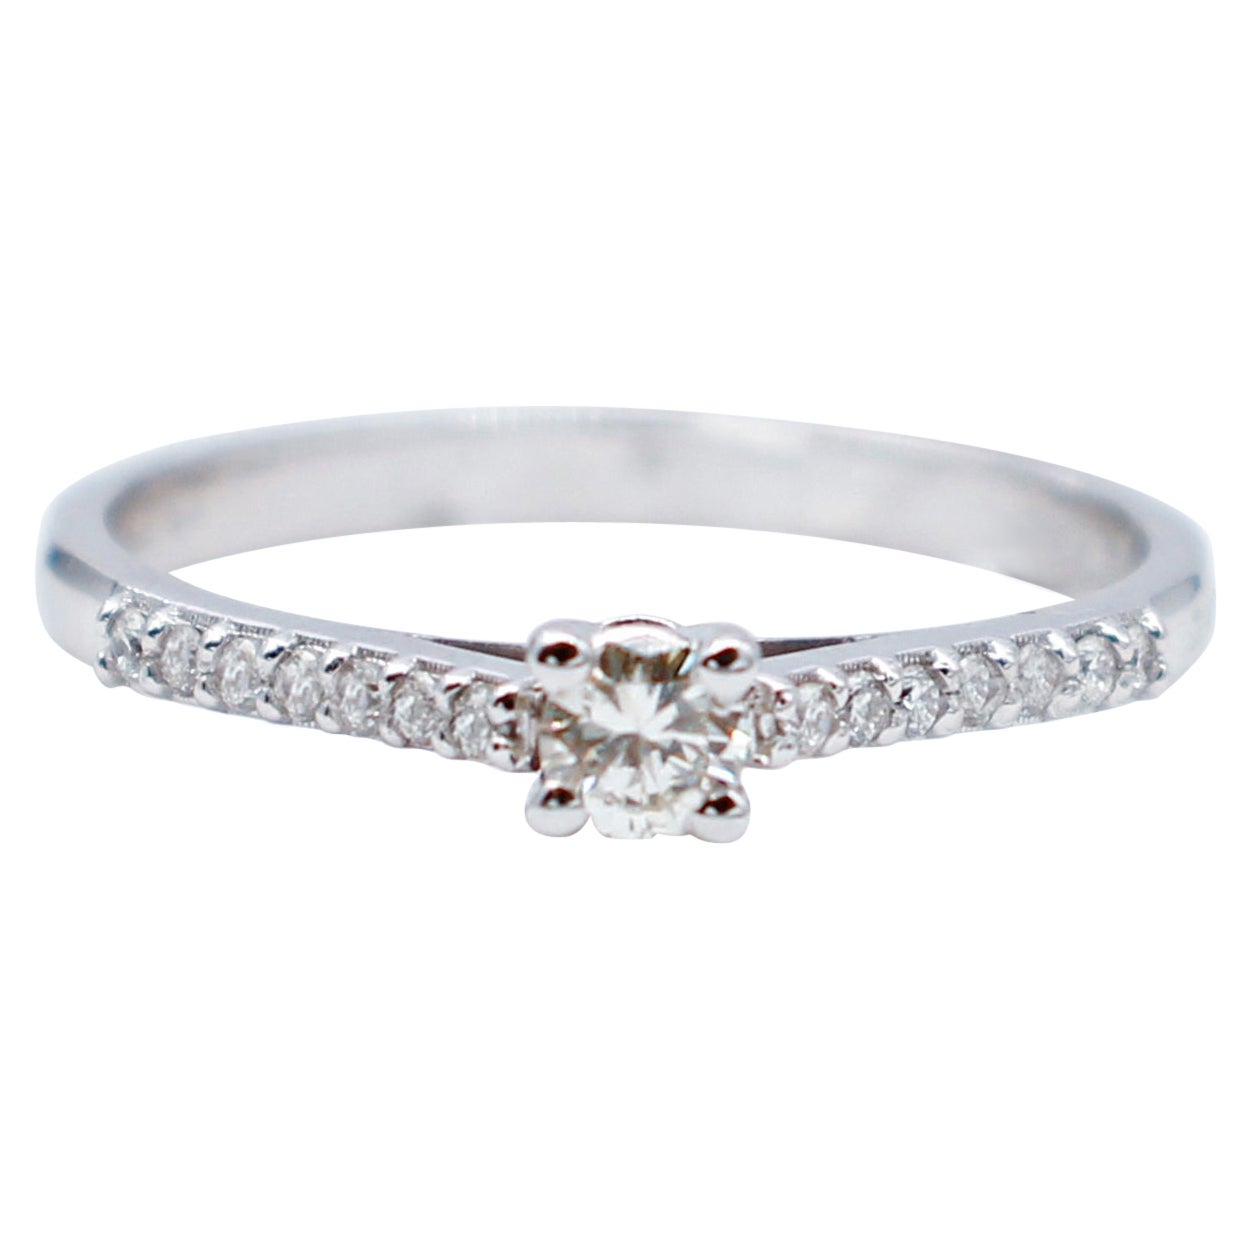 White Diamonds, 18 Karat White Gold Engagement Ring